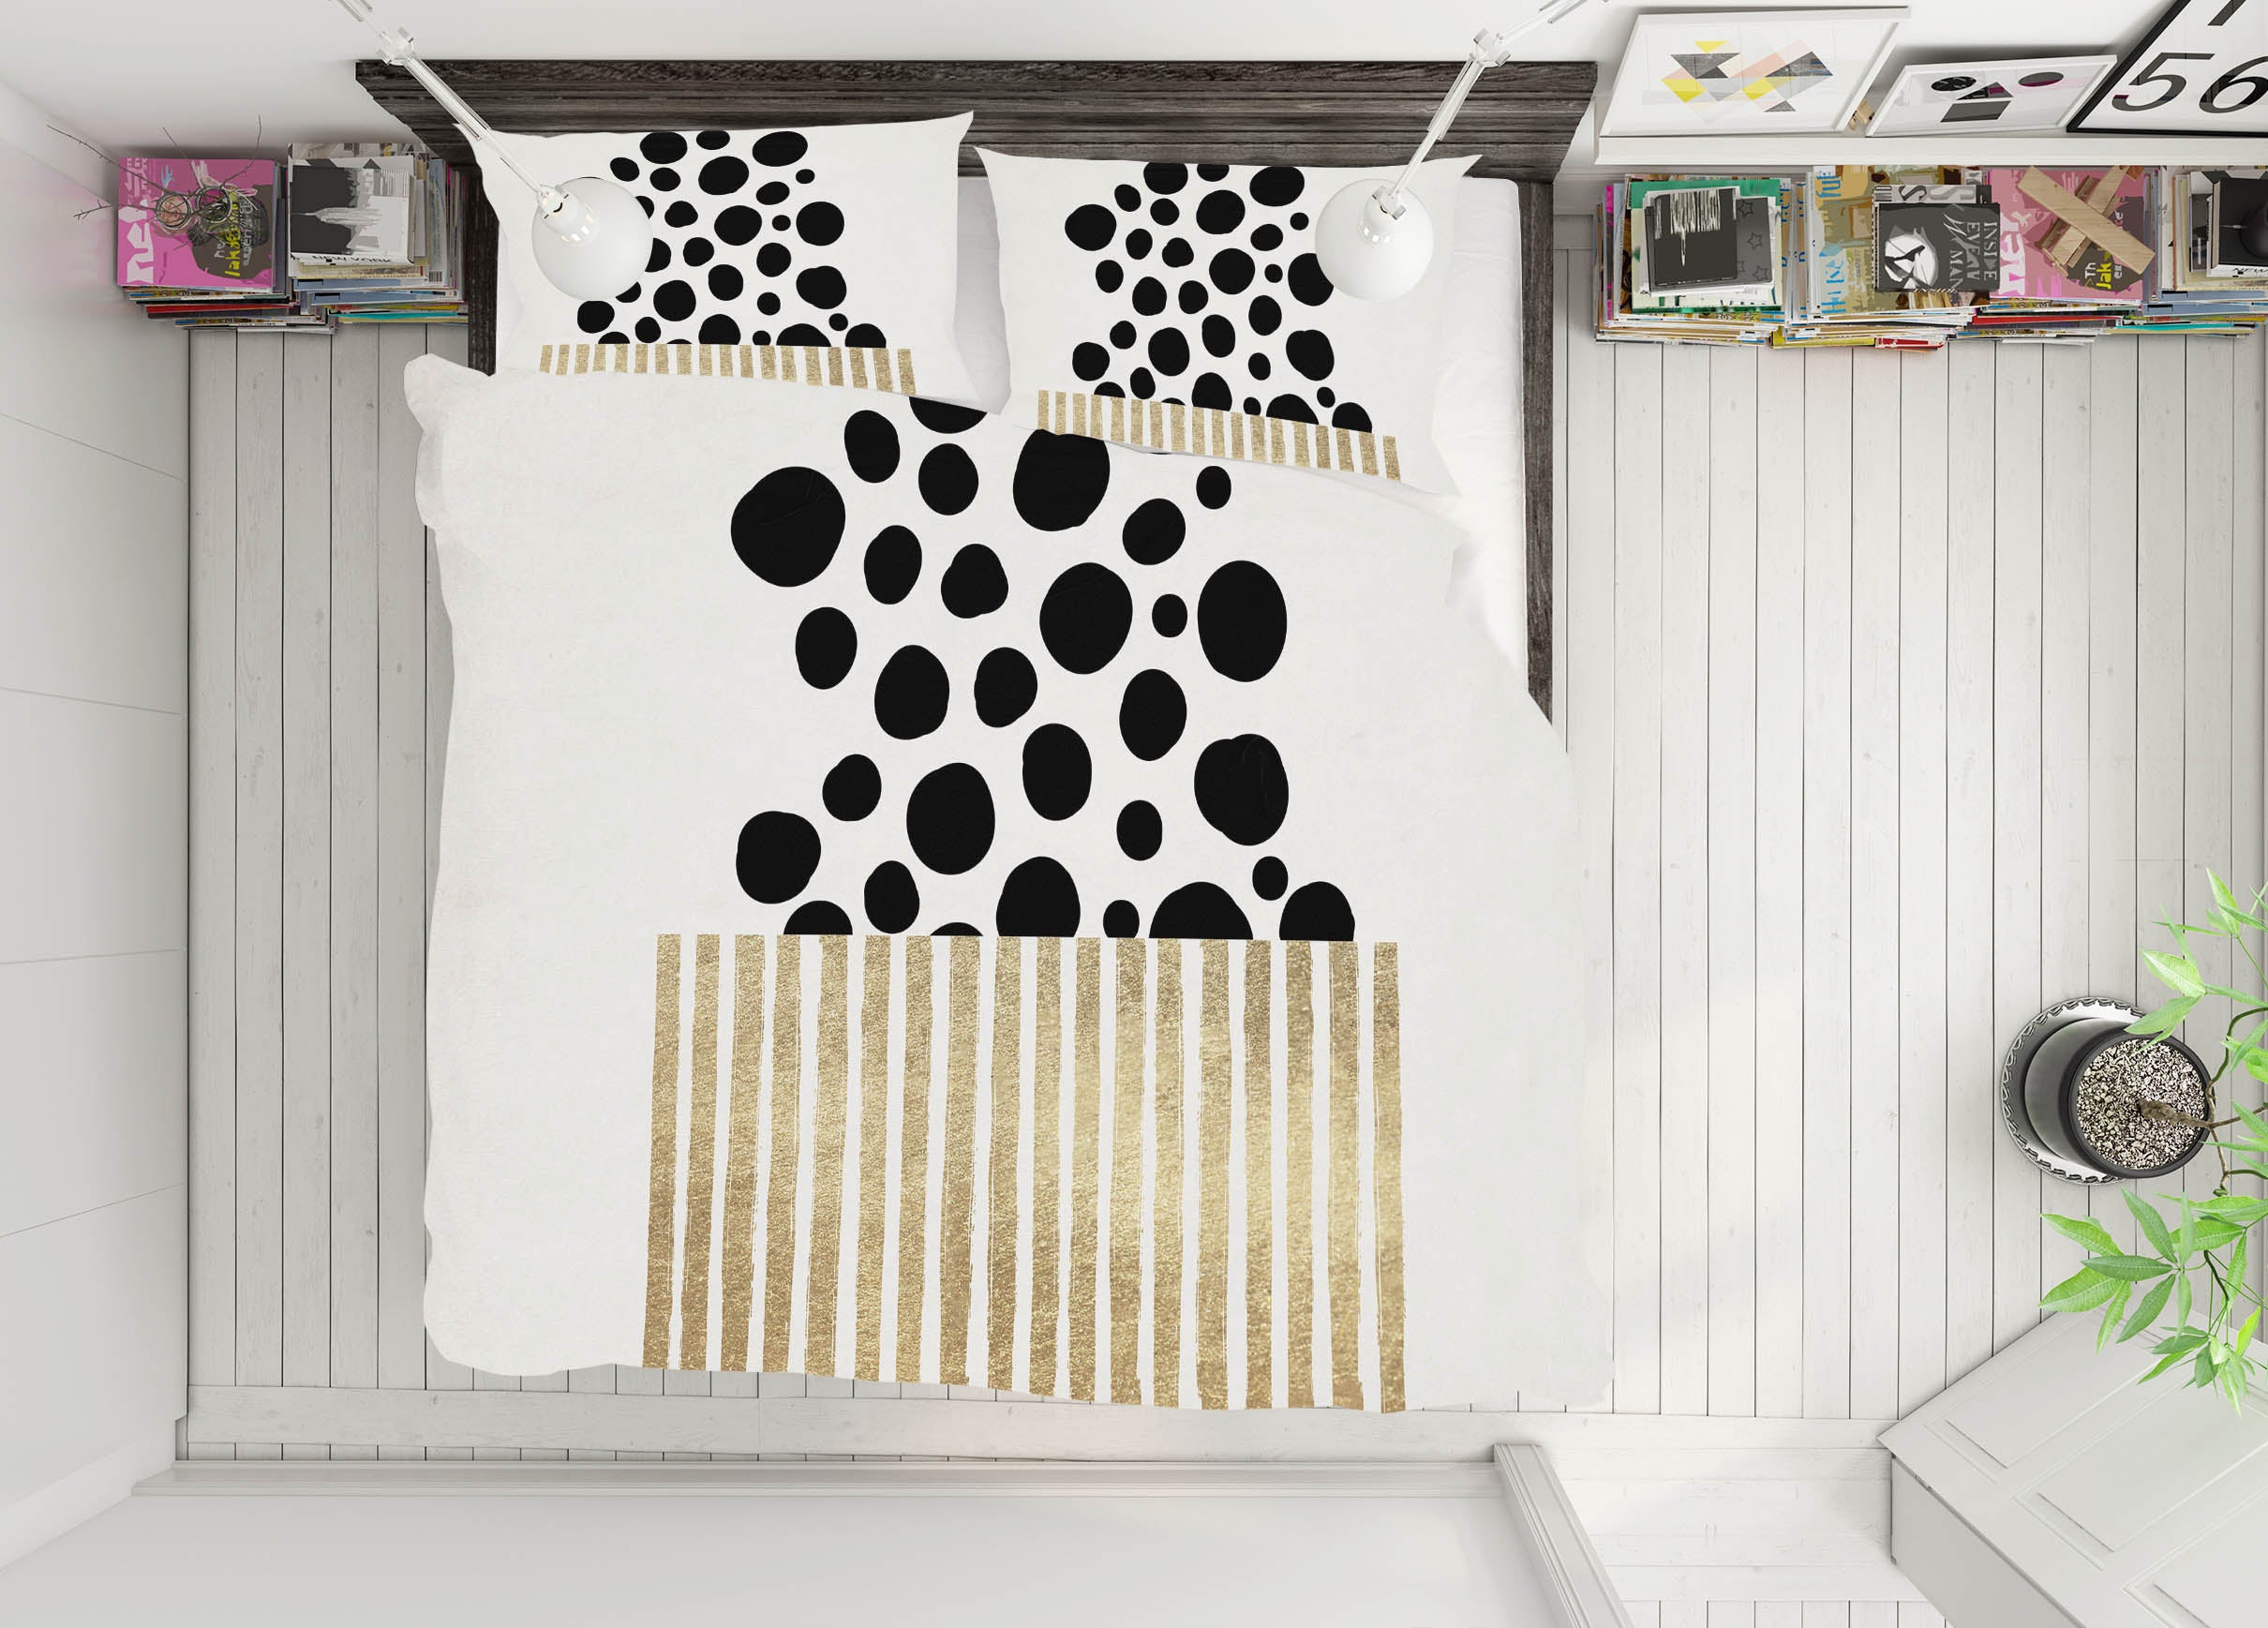 3D Abstract Pattern 198 Boris Draschoff Bedding Bed Pillowcases Quilt